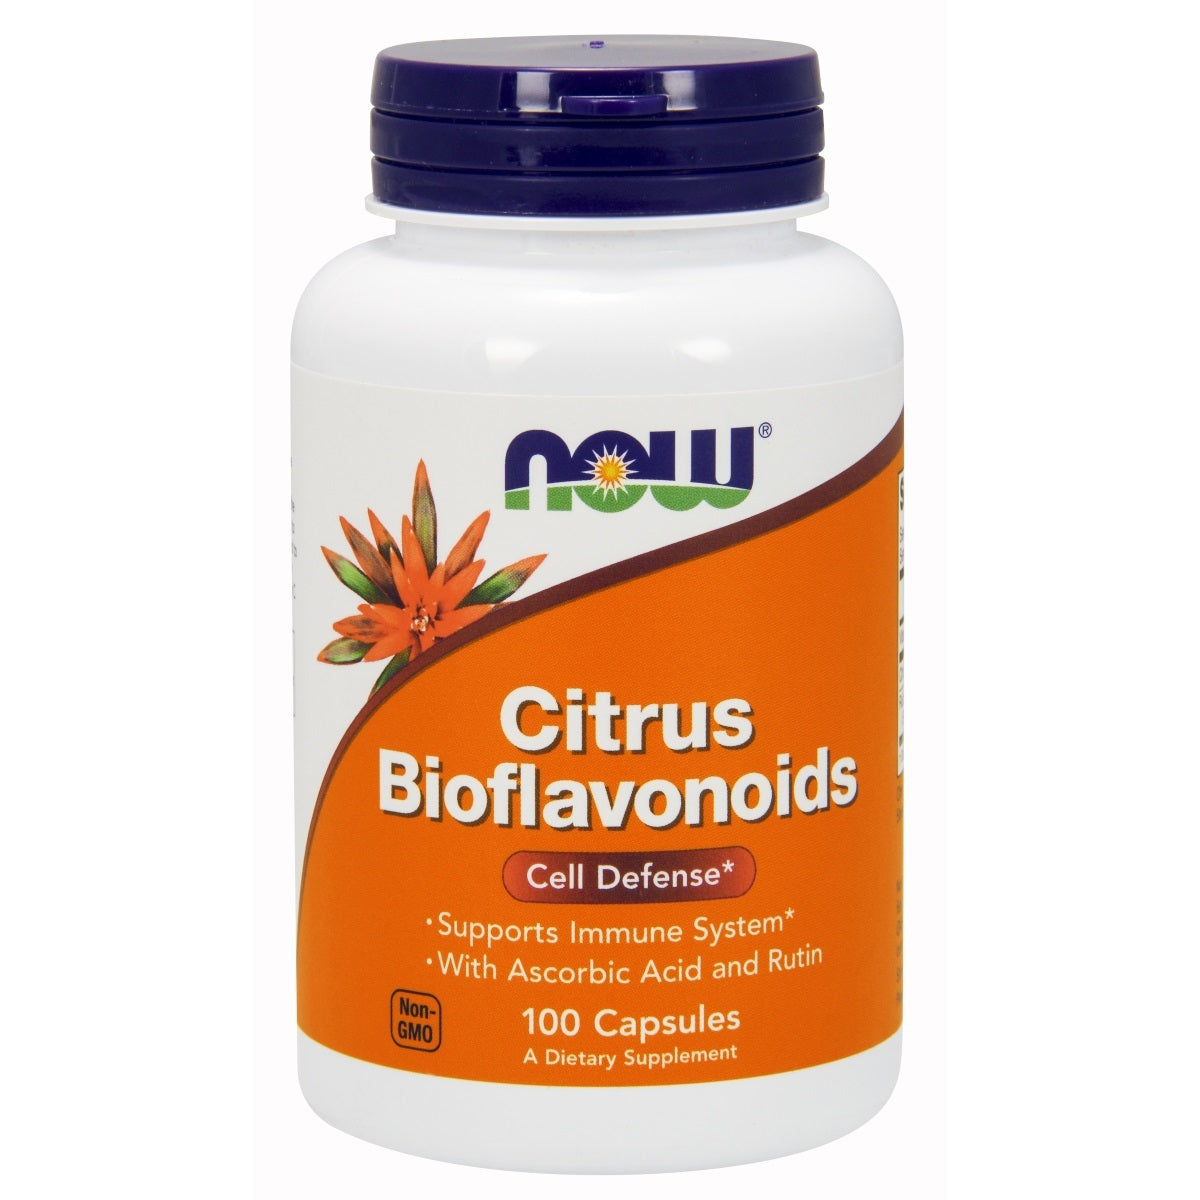 Primary image of Citrus Bioflavoids